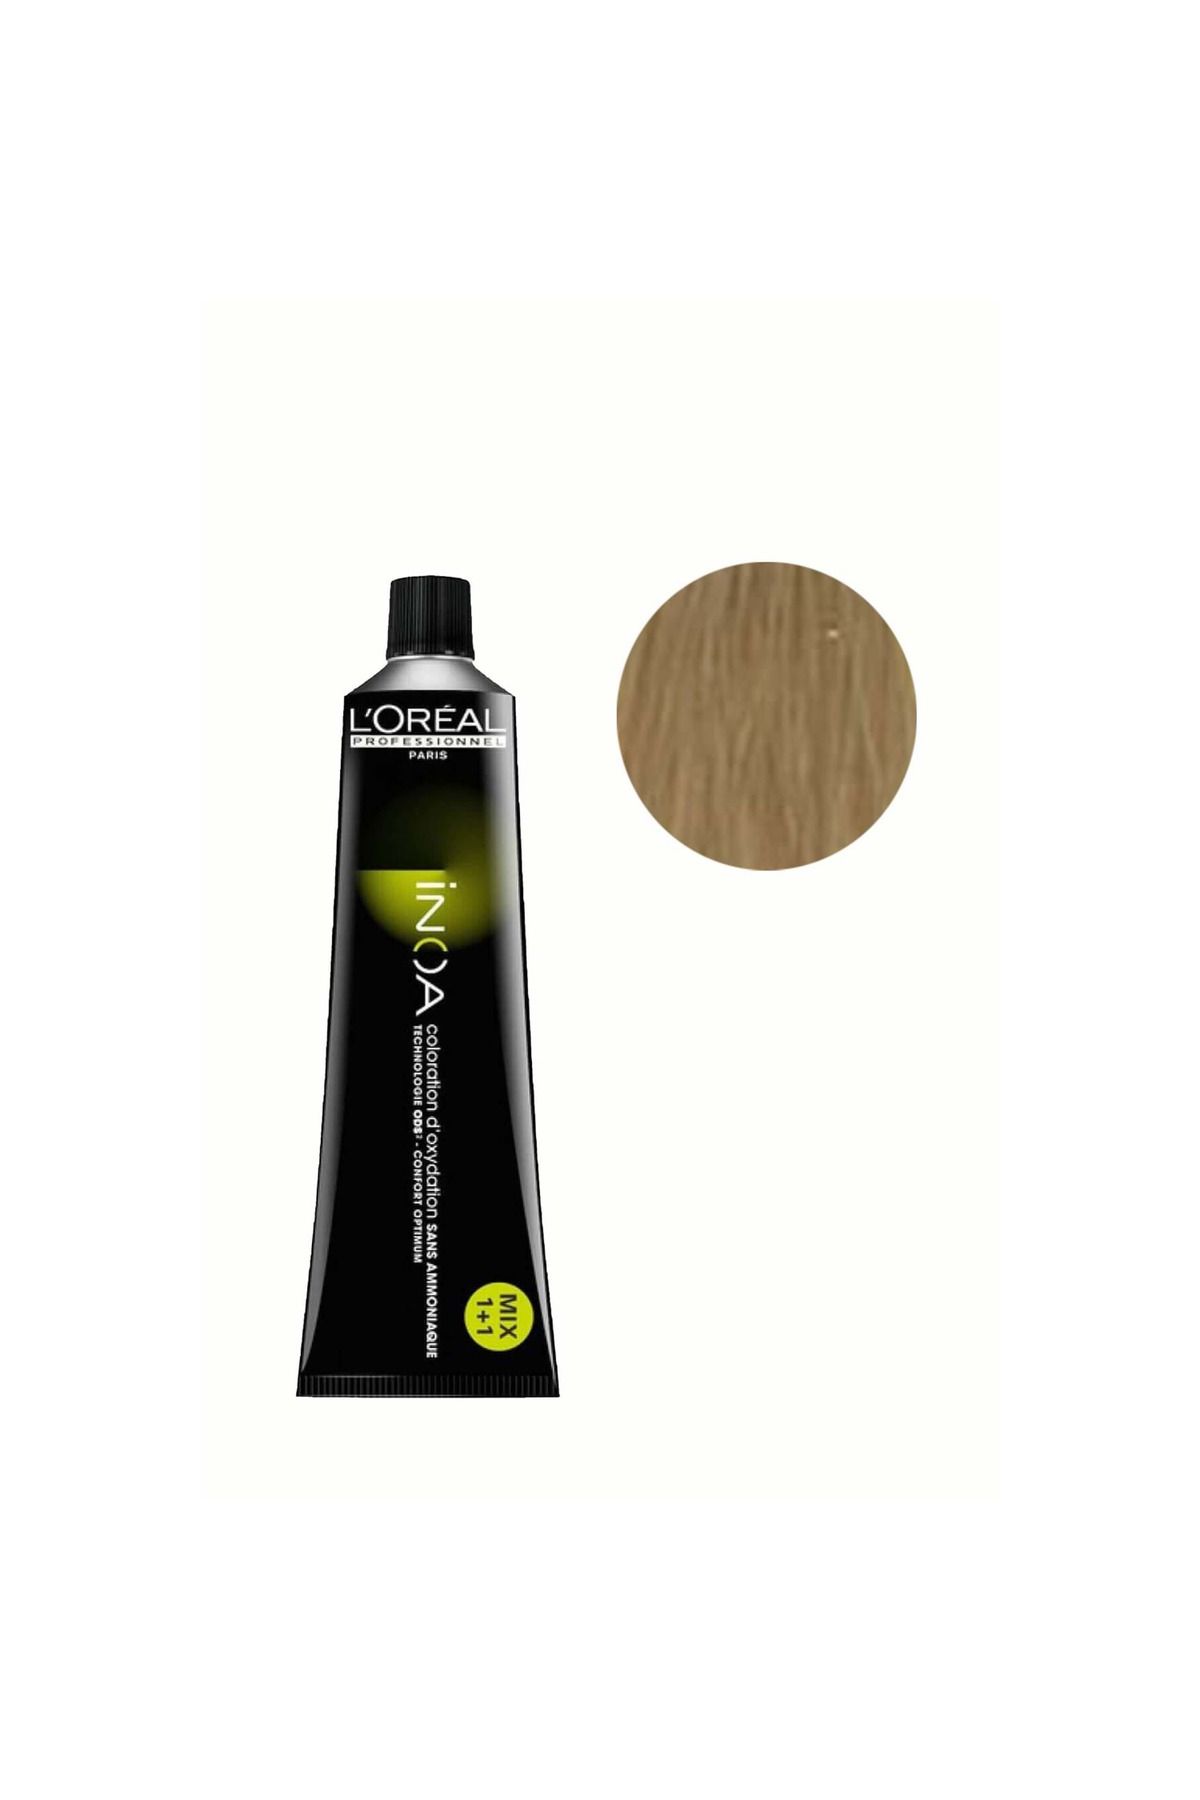 L'oreal Professionnel Inoa 10 Natural Light Blonde Ammonia Free Permament Hair Color Cream 60ml Keyk.*